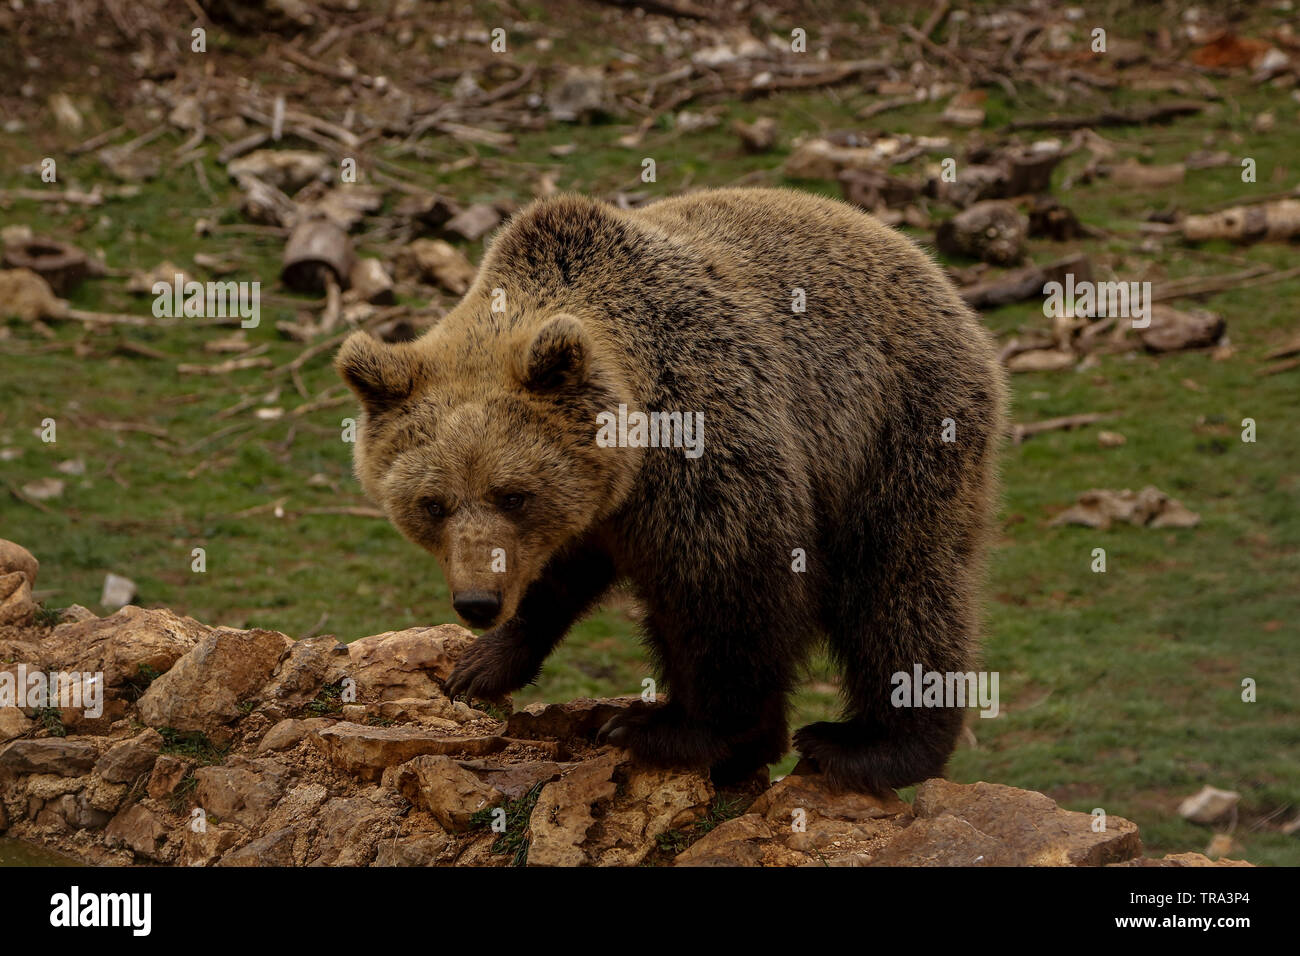 European bear (Ursus arctos)  eating food, in the village of Kutarevo, near Gospic, Croatia.  Sat. April, 4, 2015 Stock Photo